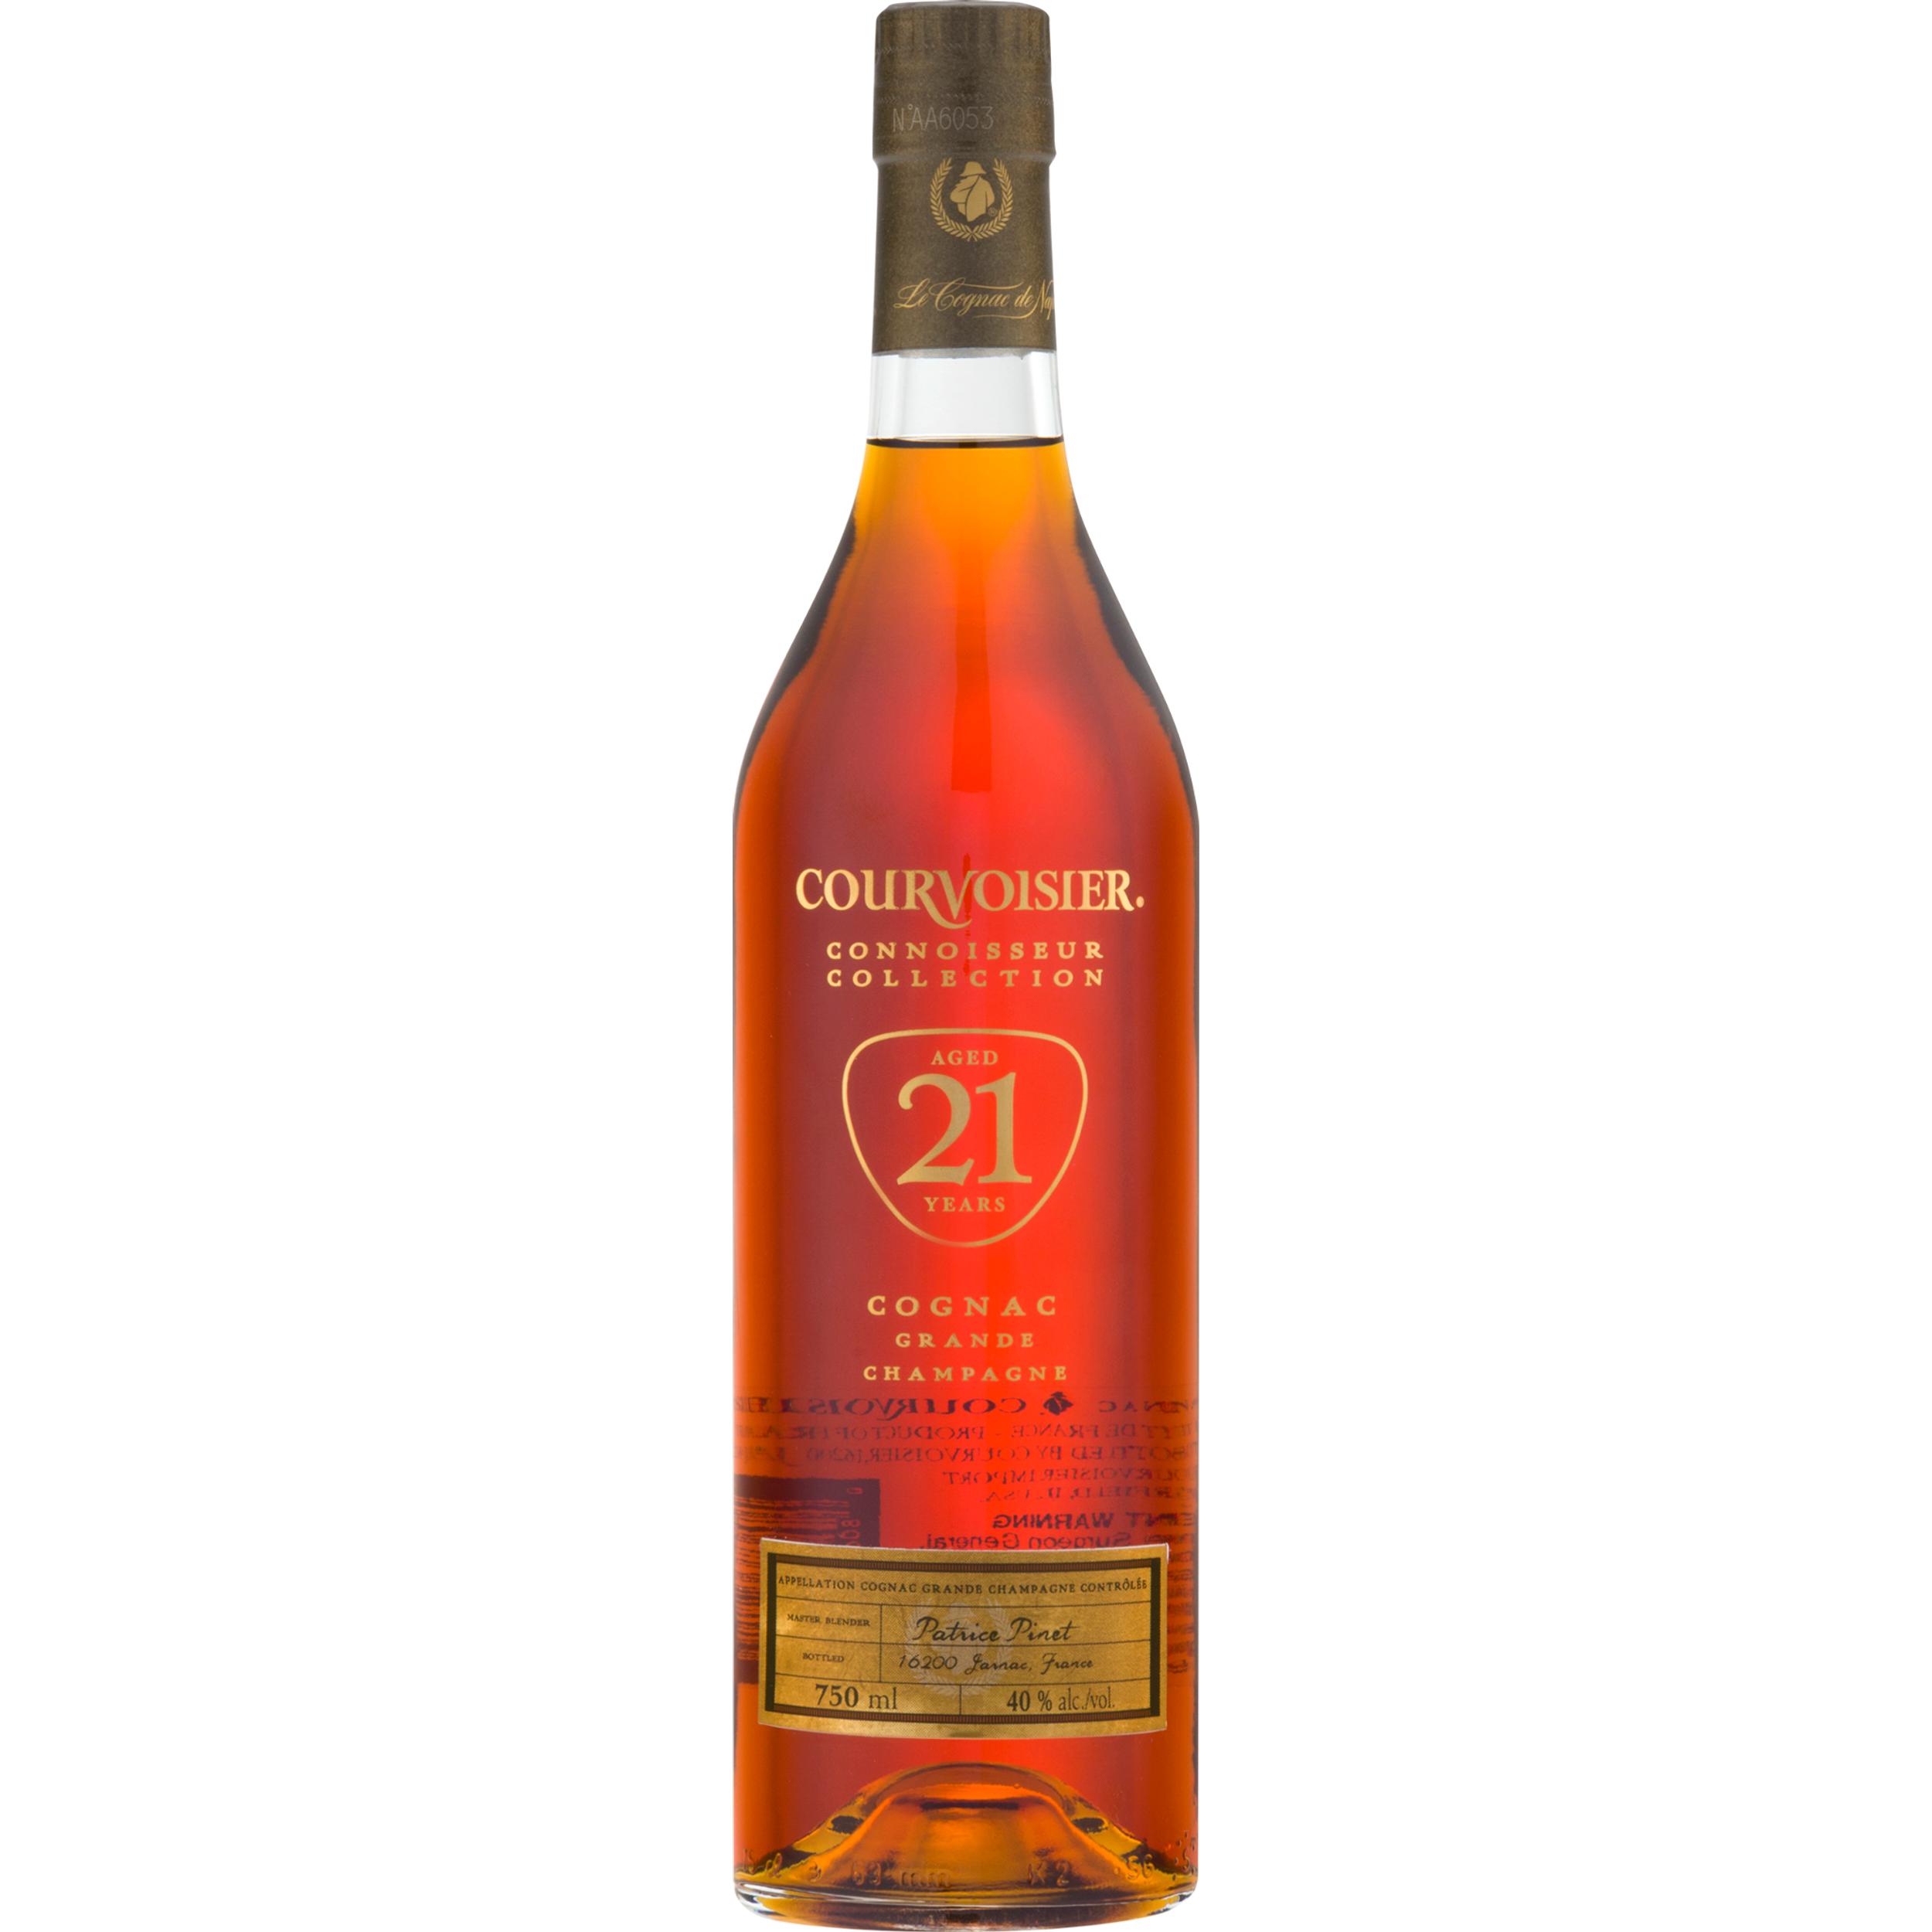  Courvoisier Aged 21 Year Cognac 750ml